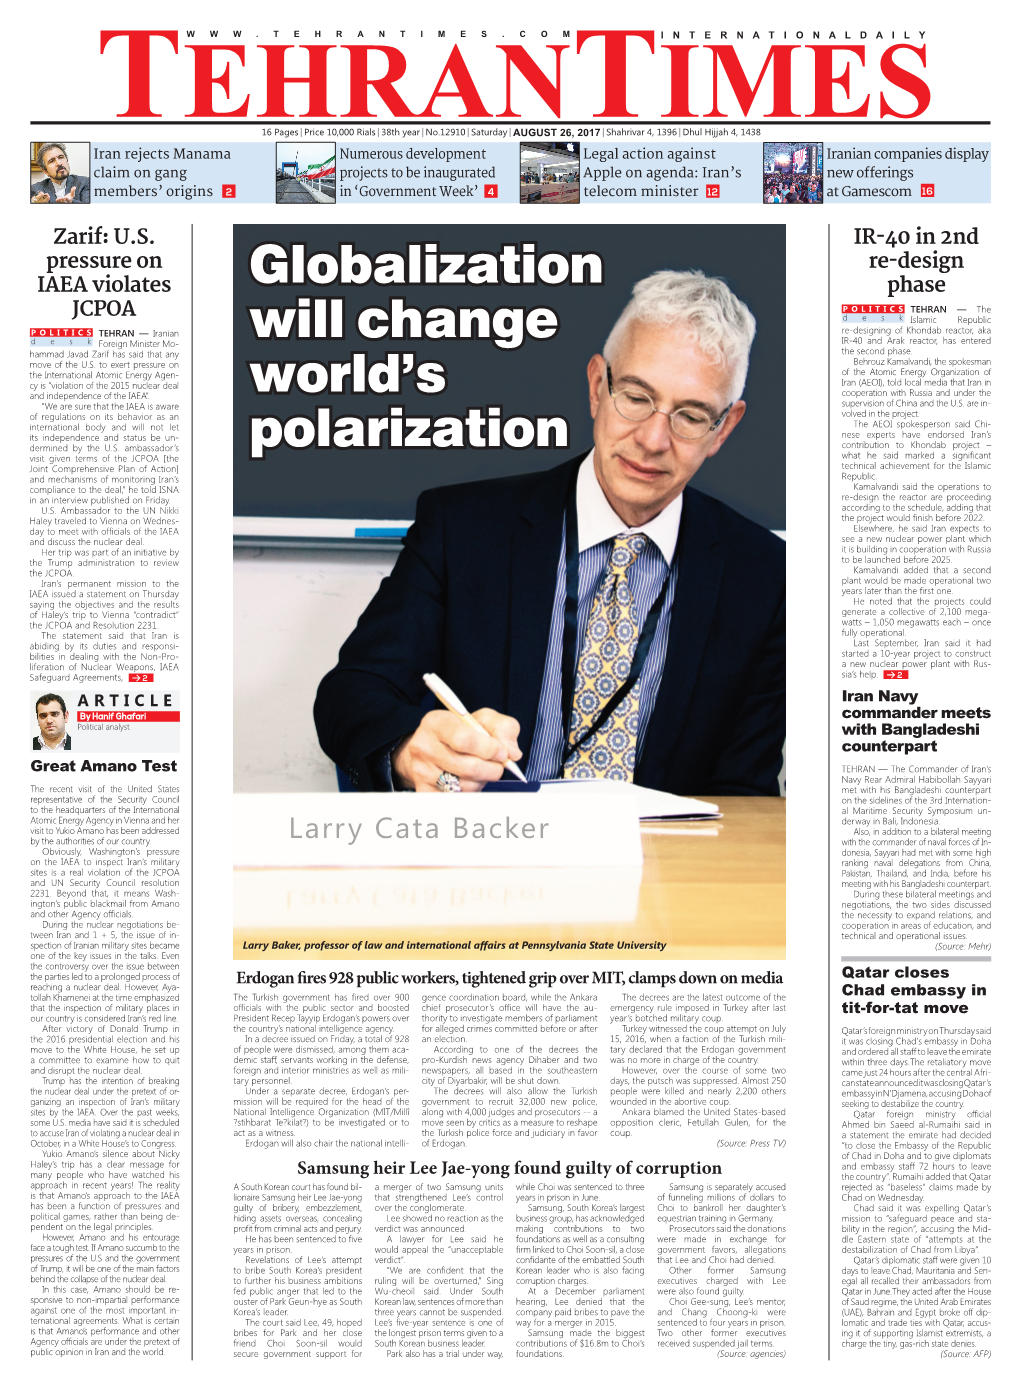 Globalization Will Change World's Polarization